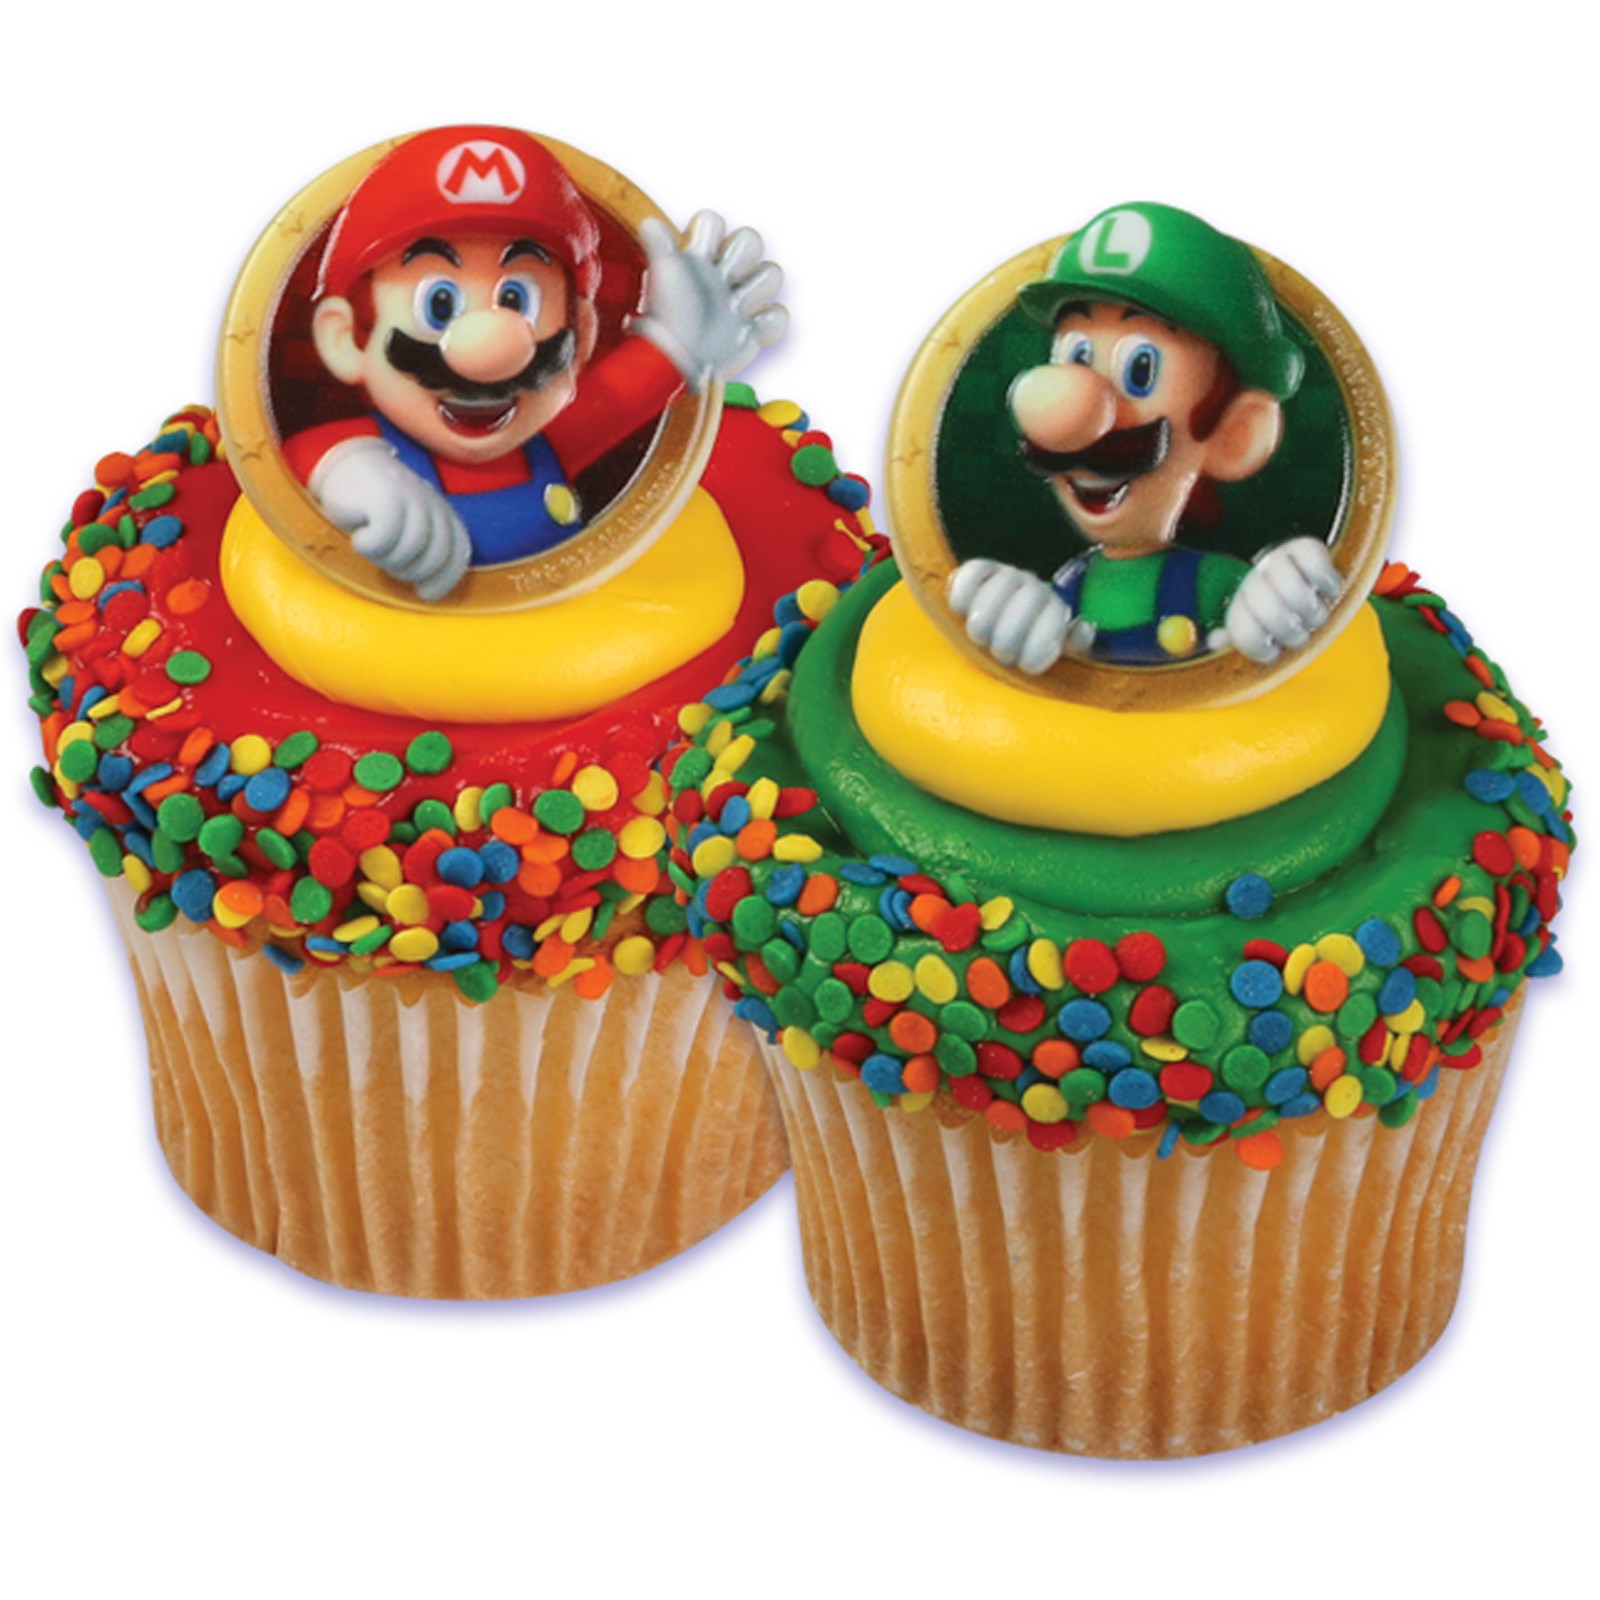 Super Mario Rings - Cupcake Toppers